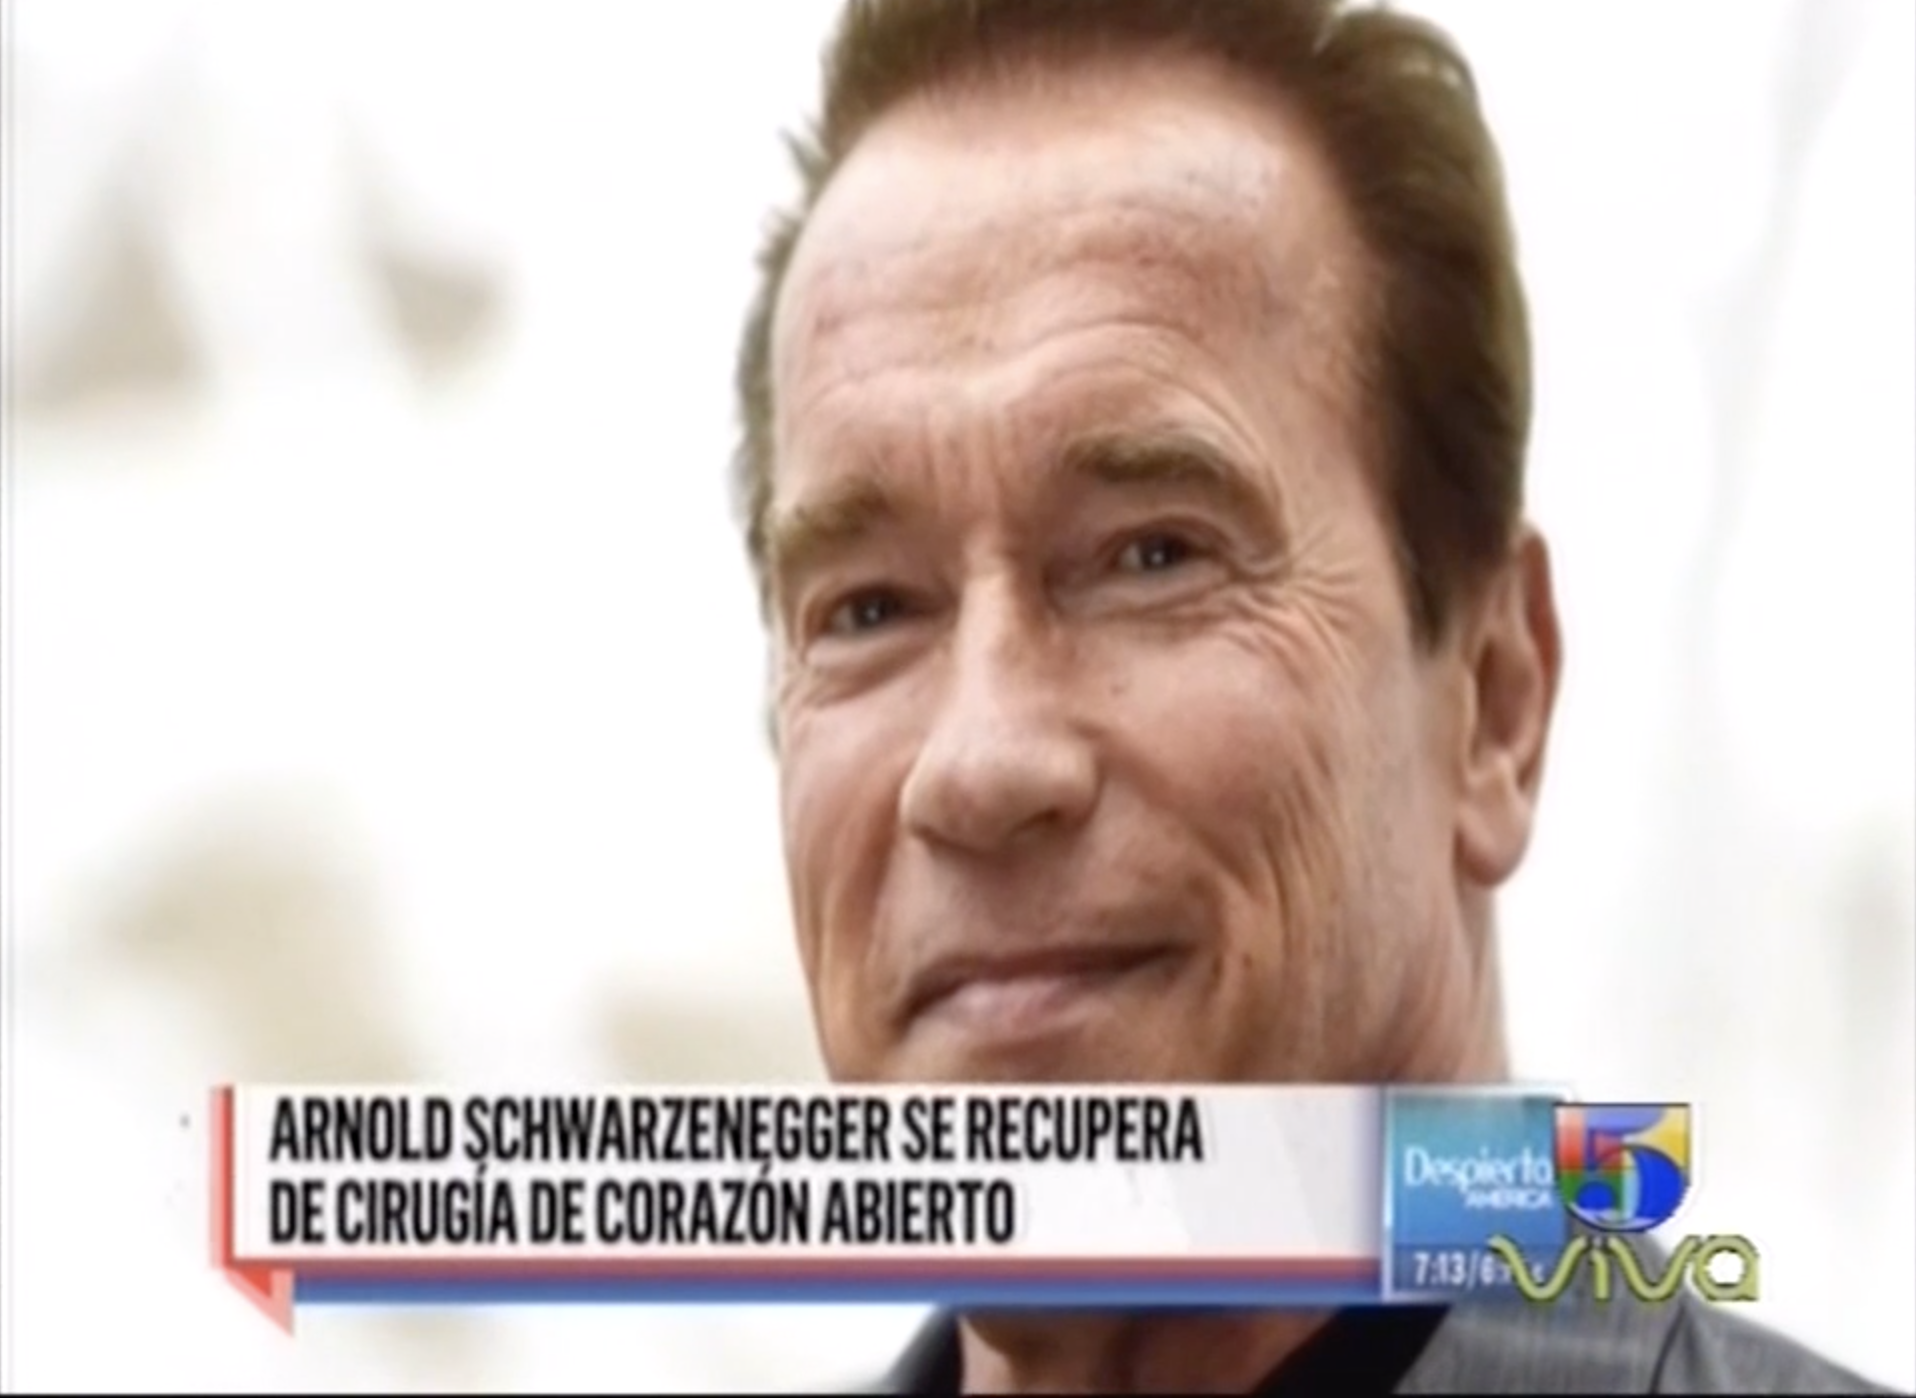 Arnold Schwarzenegger Se Recupera De Cirugía De Corazón Abierto